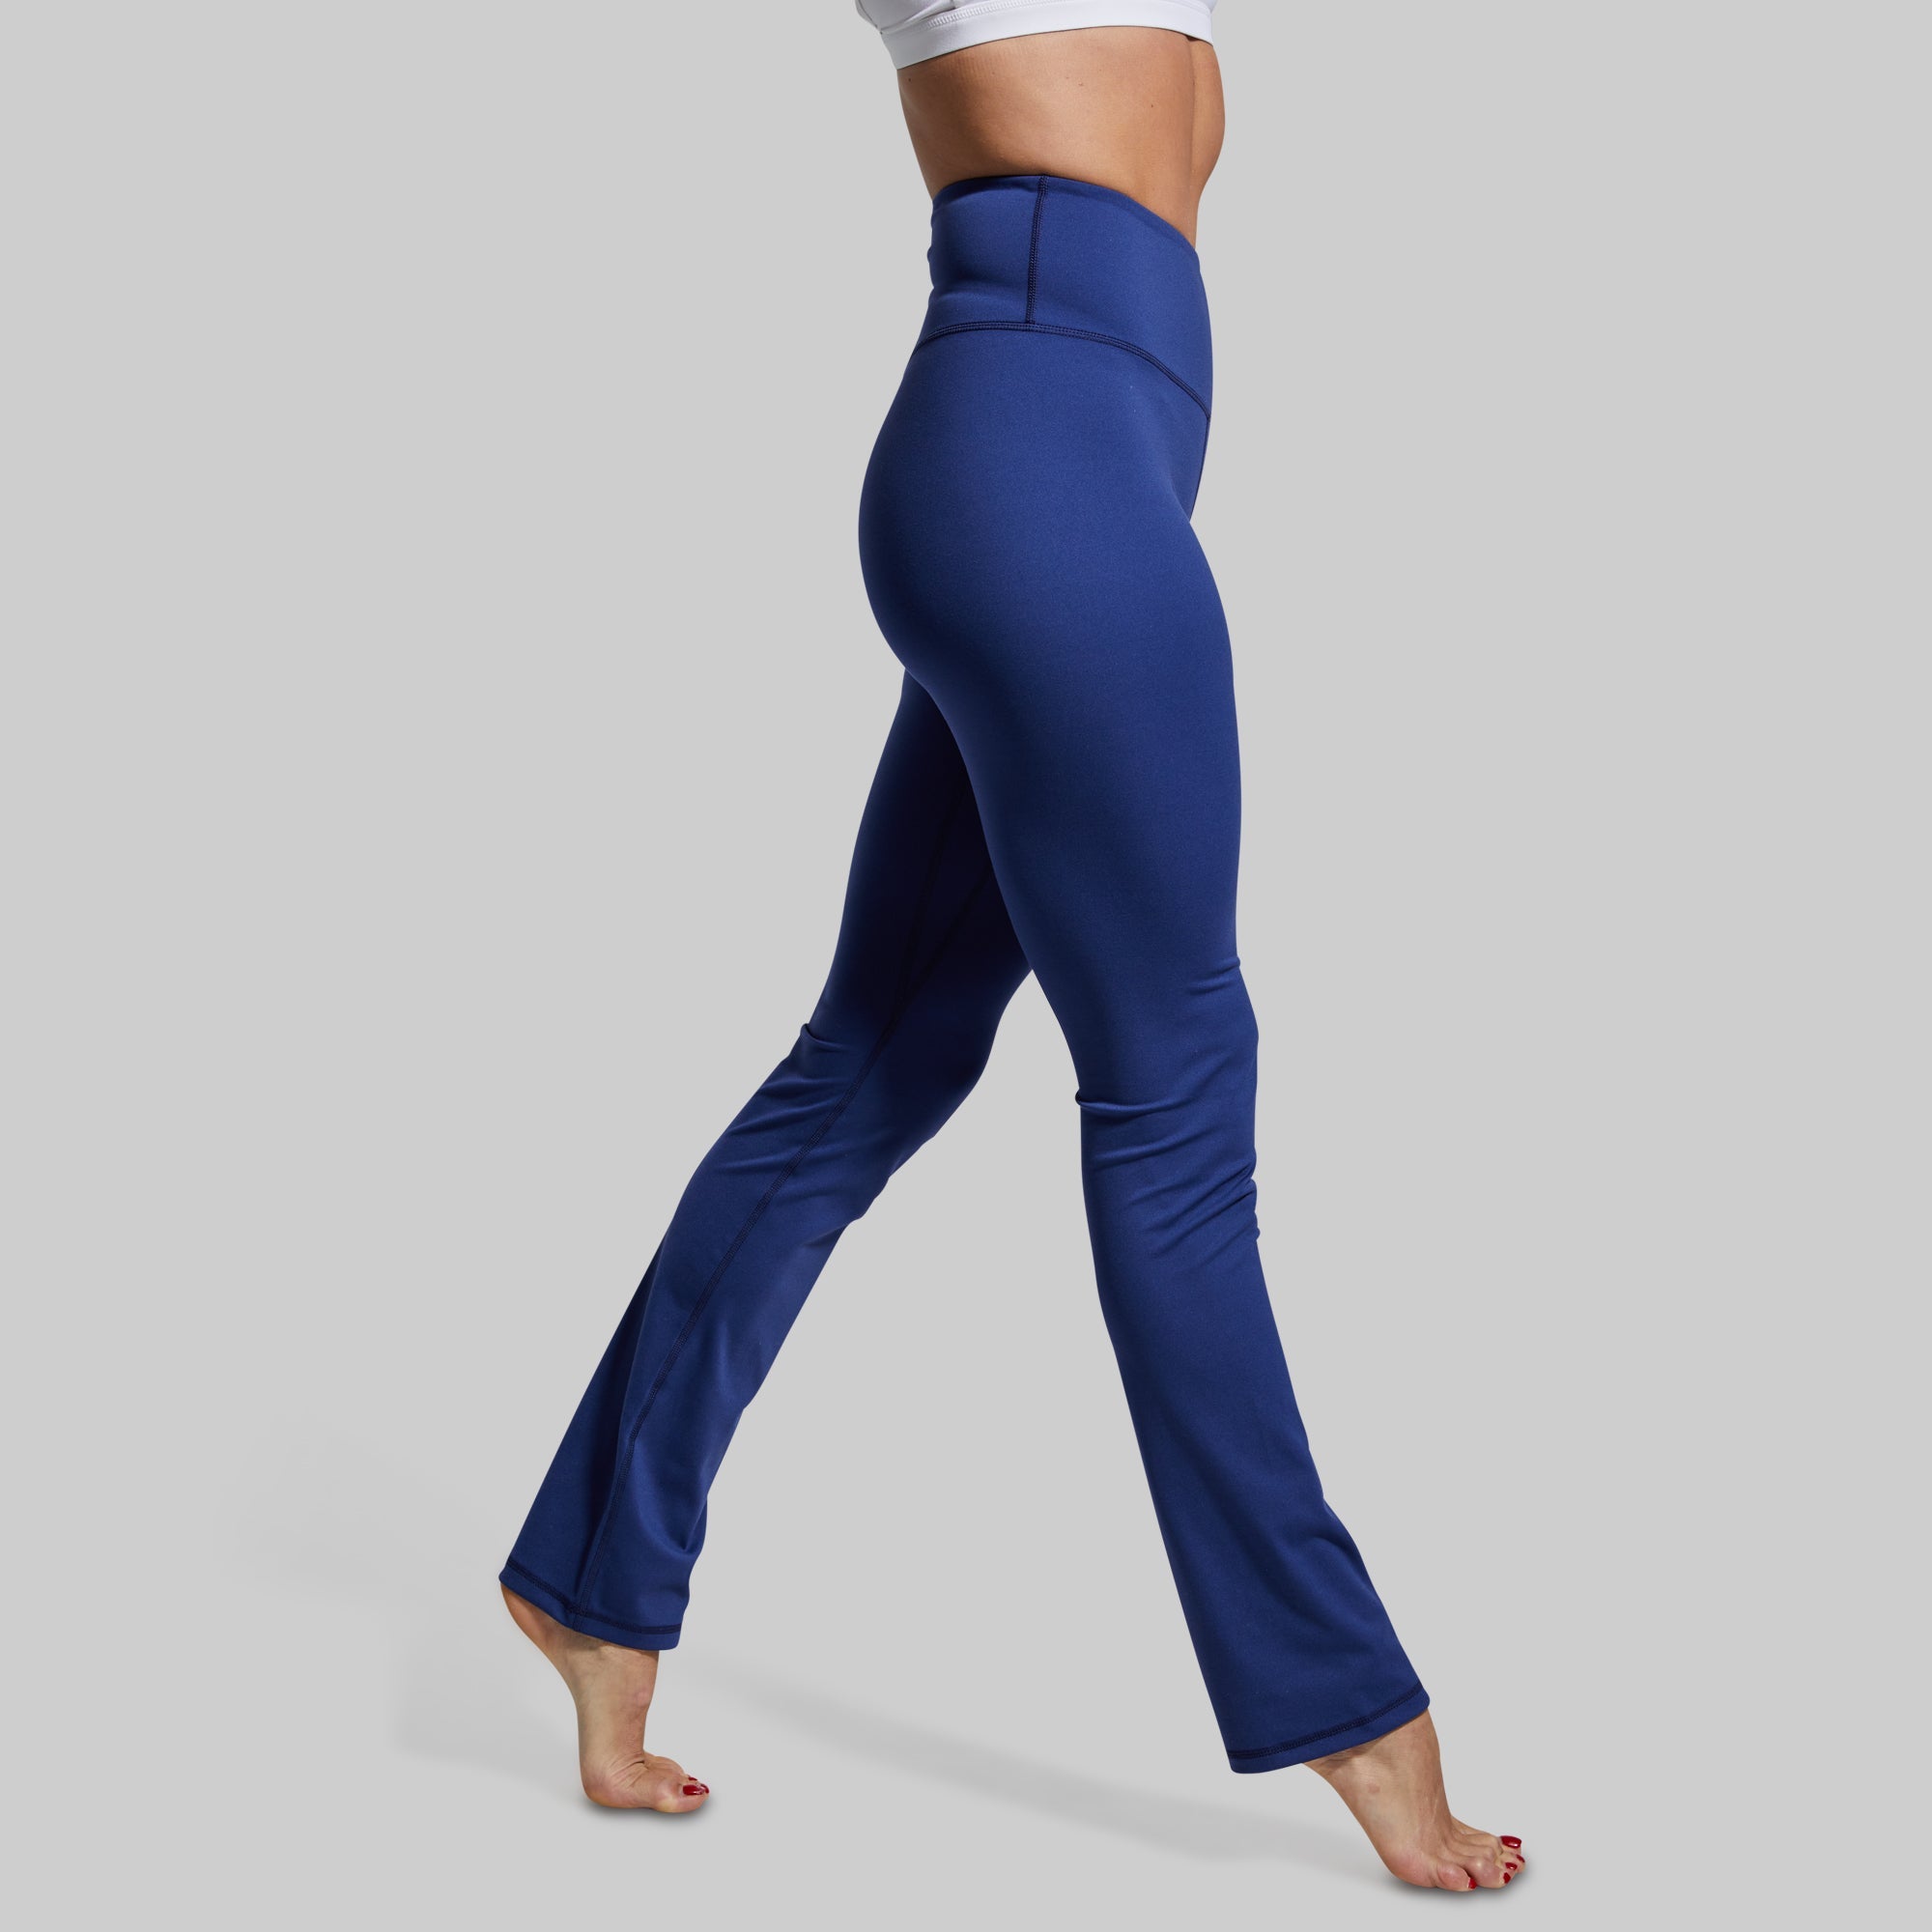 Womens Blue Yoga Pants & Tights.